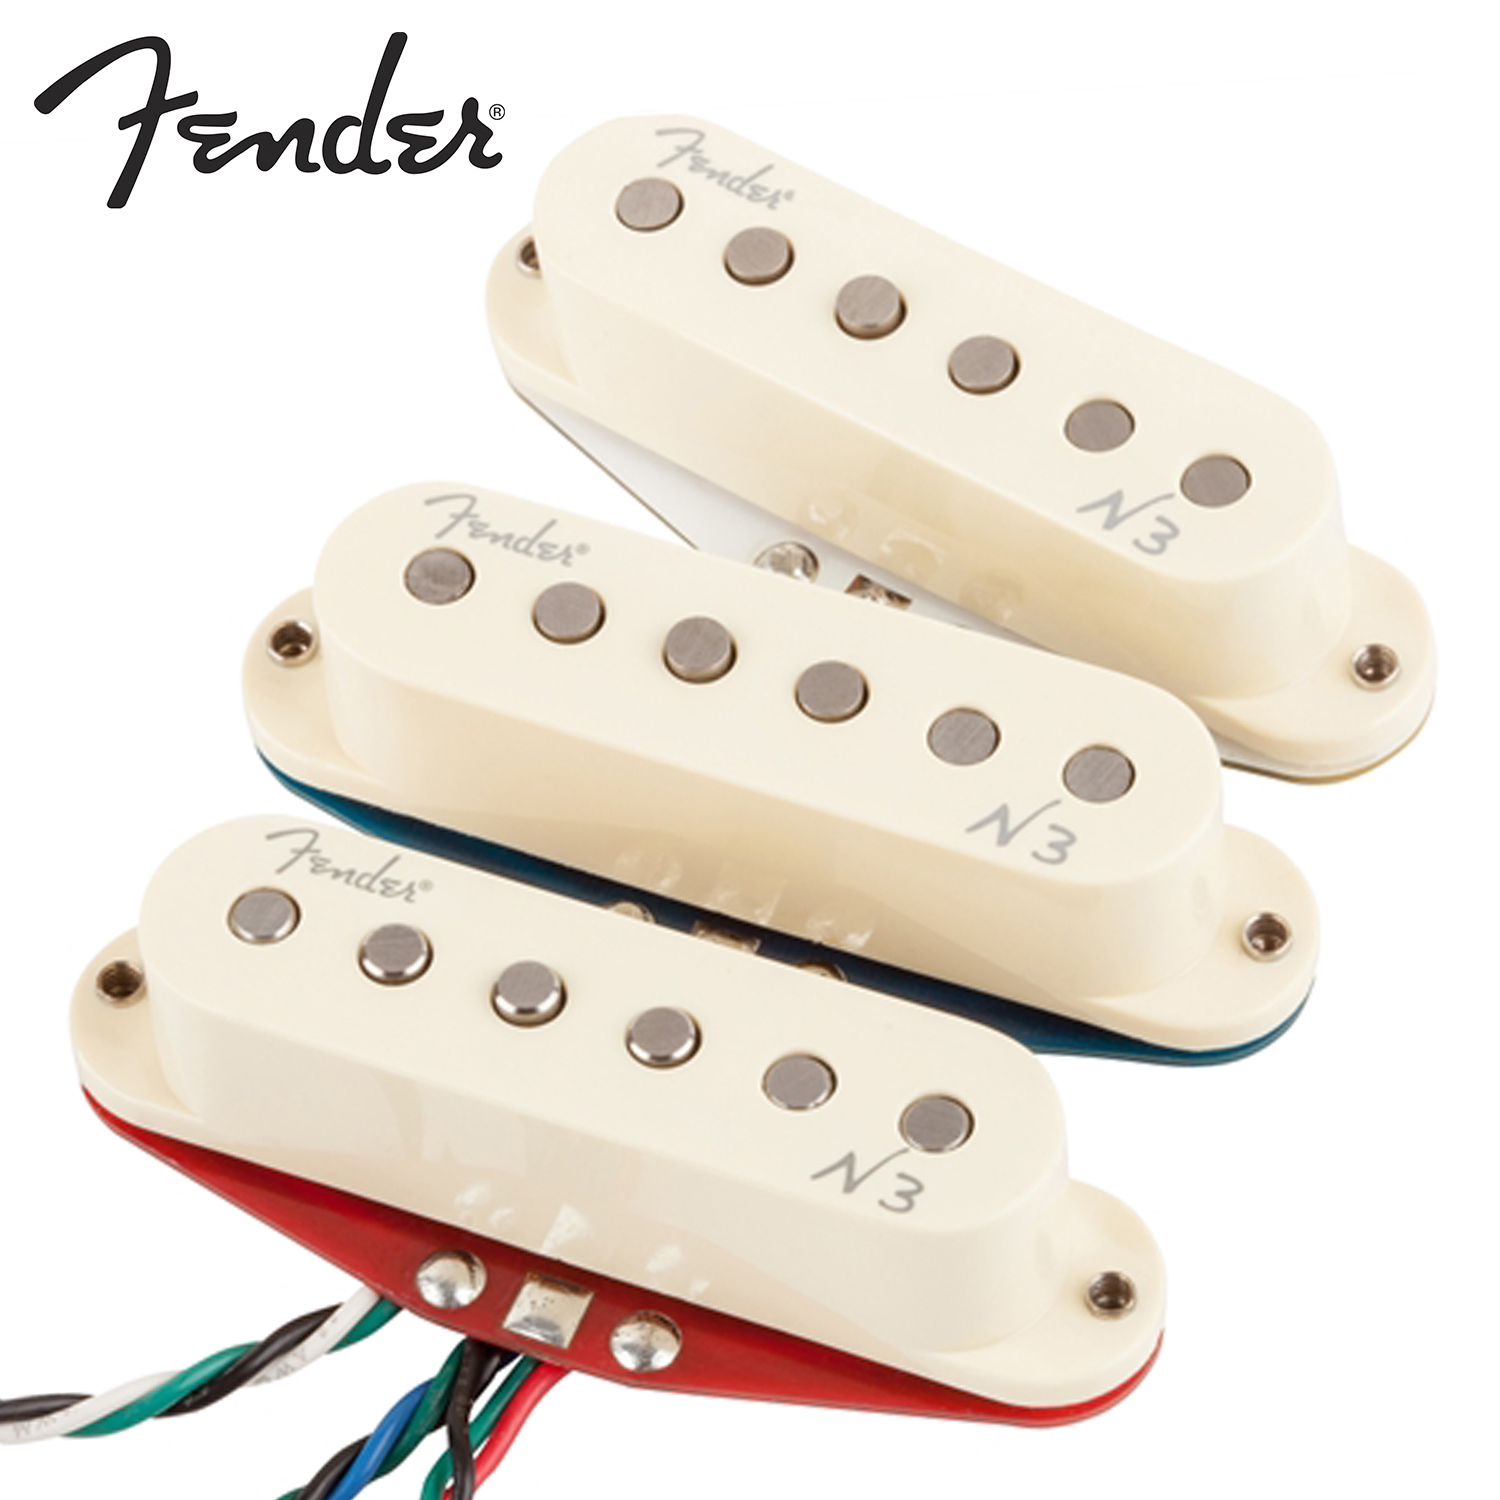 Fender® N3 Noiseless Stratocaster ปิ๊กอัพกีตาร์ไฟฟ้า ทรง Strat แบบซิงเกิลคอยล์ (Stratocaster Electric Guitar Pickup / SSS Pickups Set) + แถมฟรีอุปกรณ์สำหรับติดตั้ง